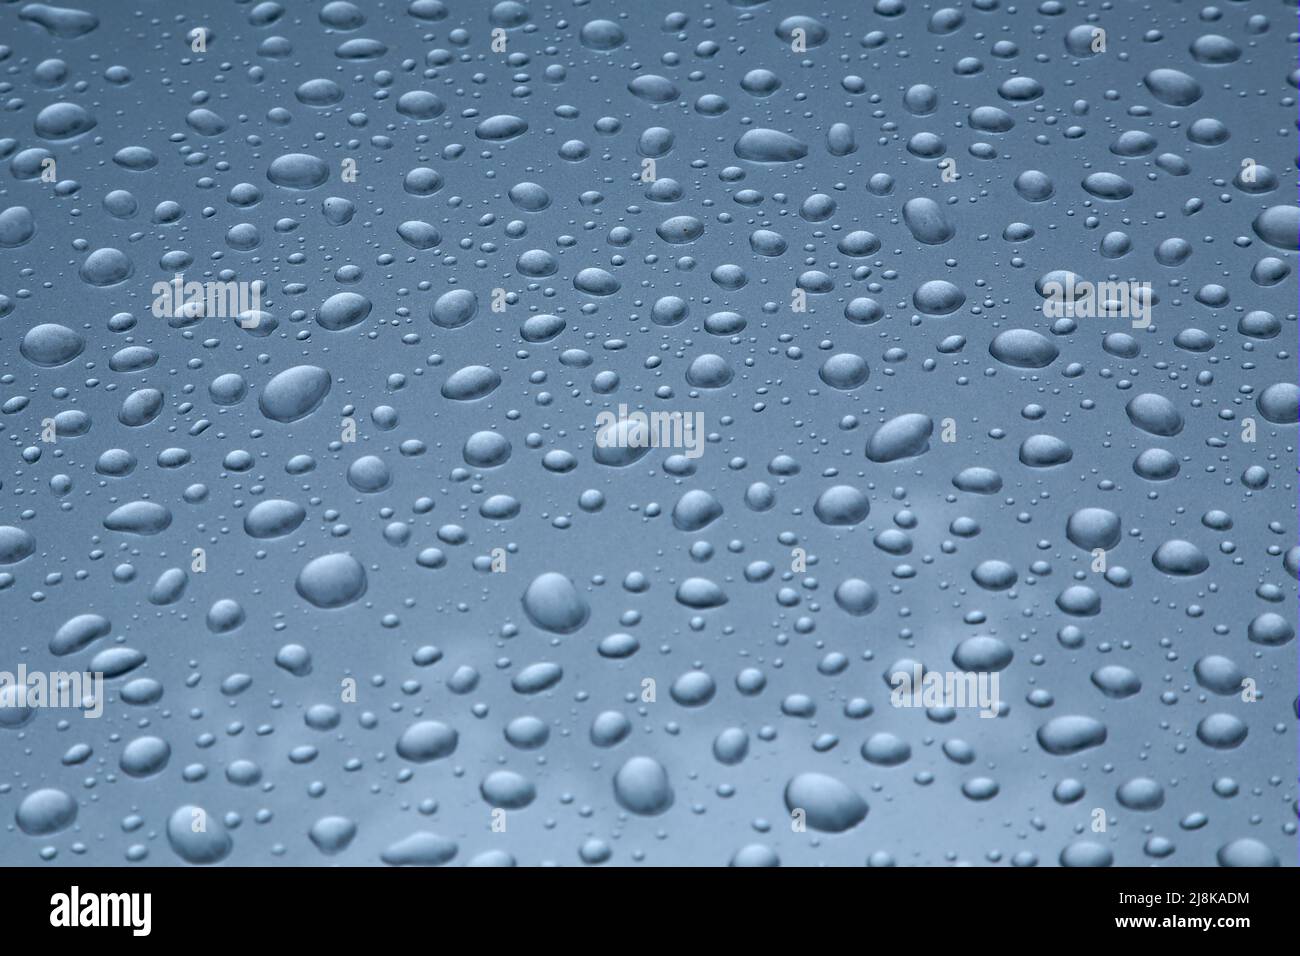 Shiny Water Droplets Stock Photo